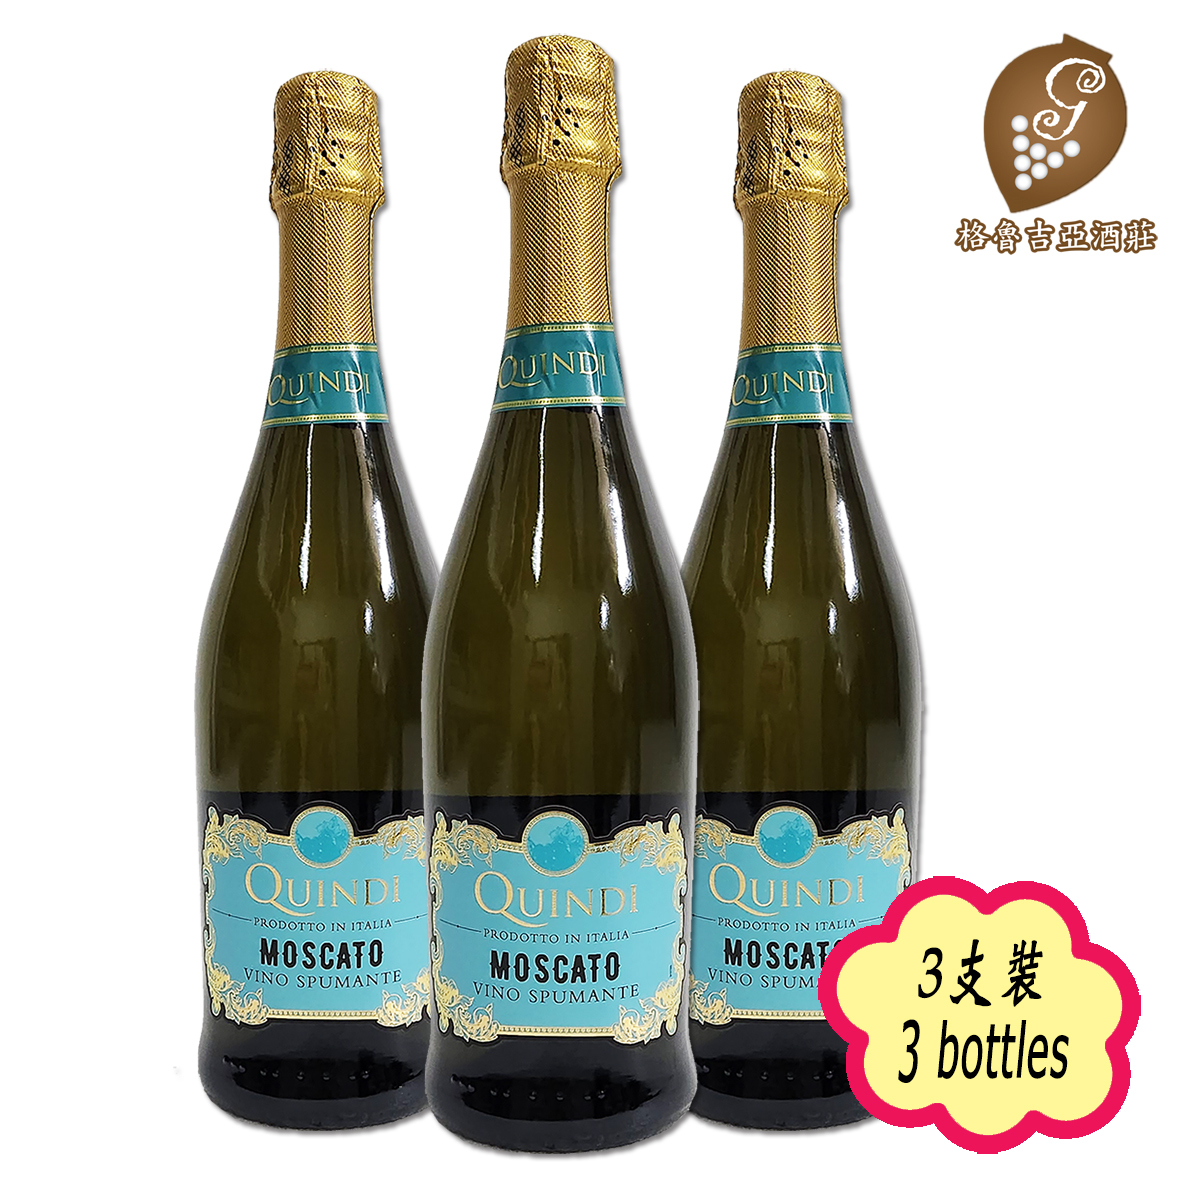 QUINDI - Moscato Sparkling x 3 bottles